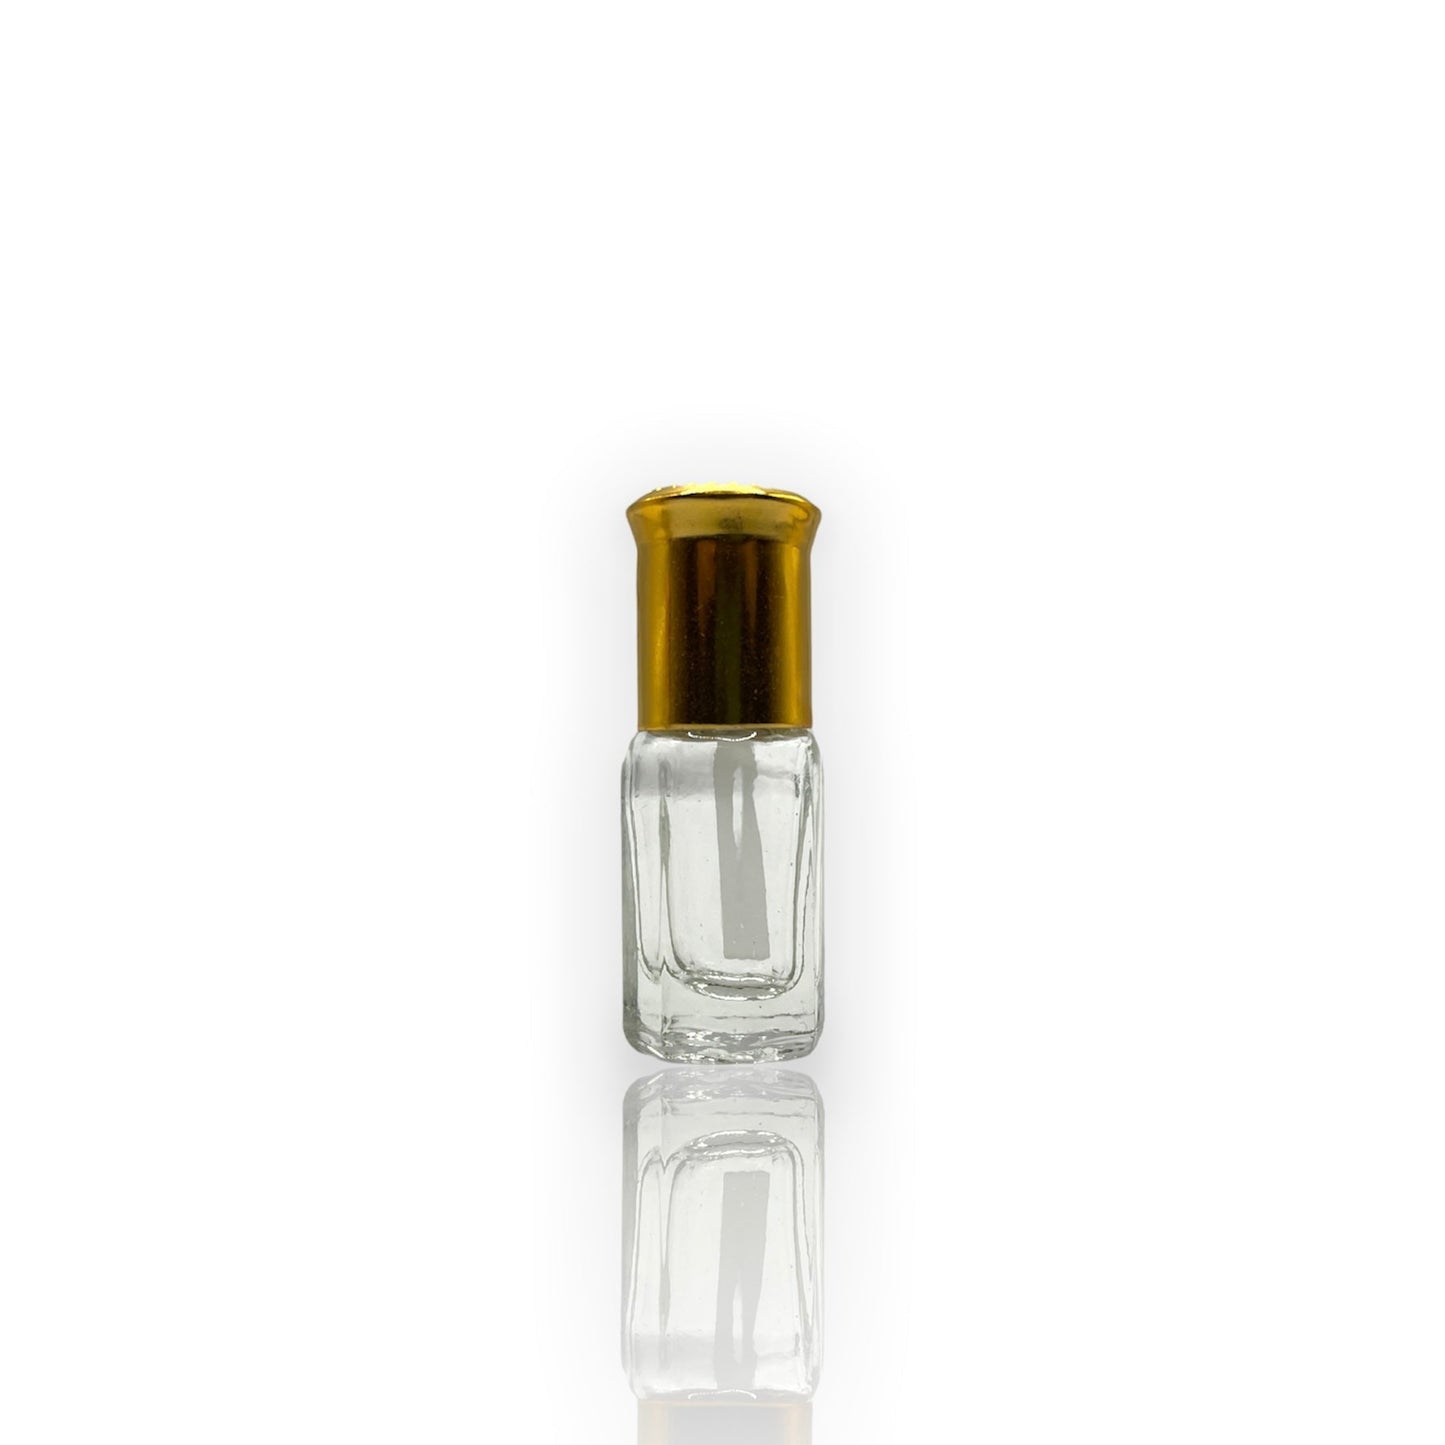 F-01 Oil Perfume *Inspired By Black Opium